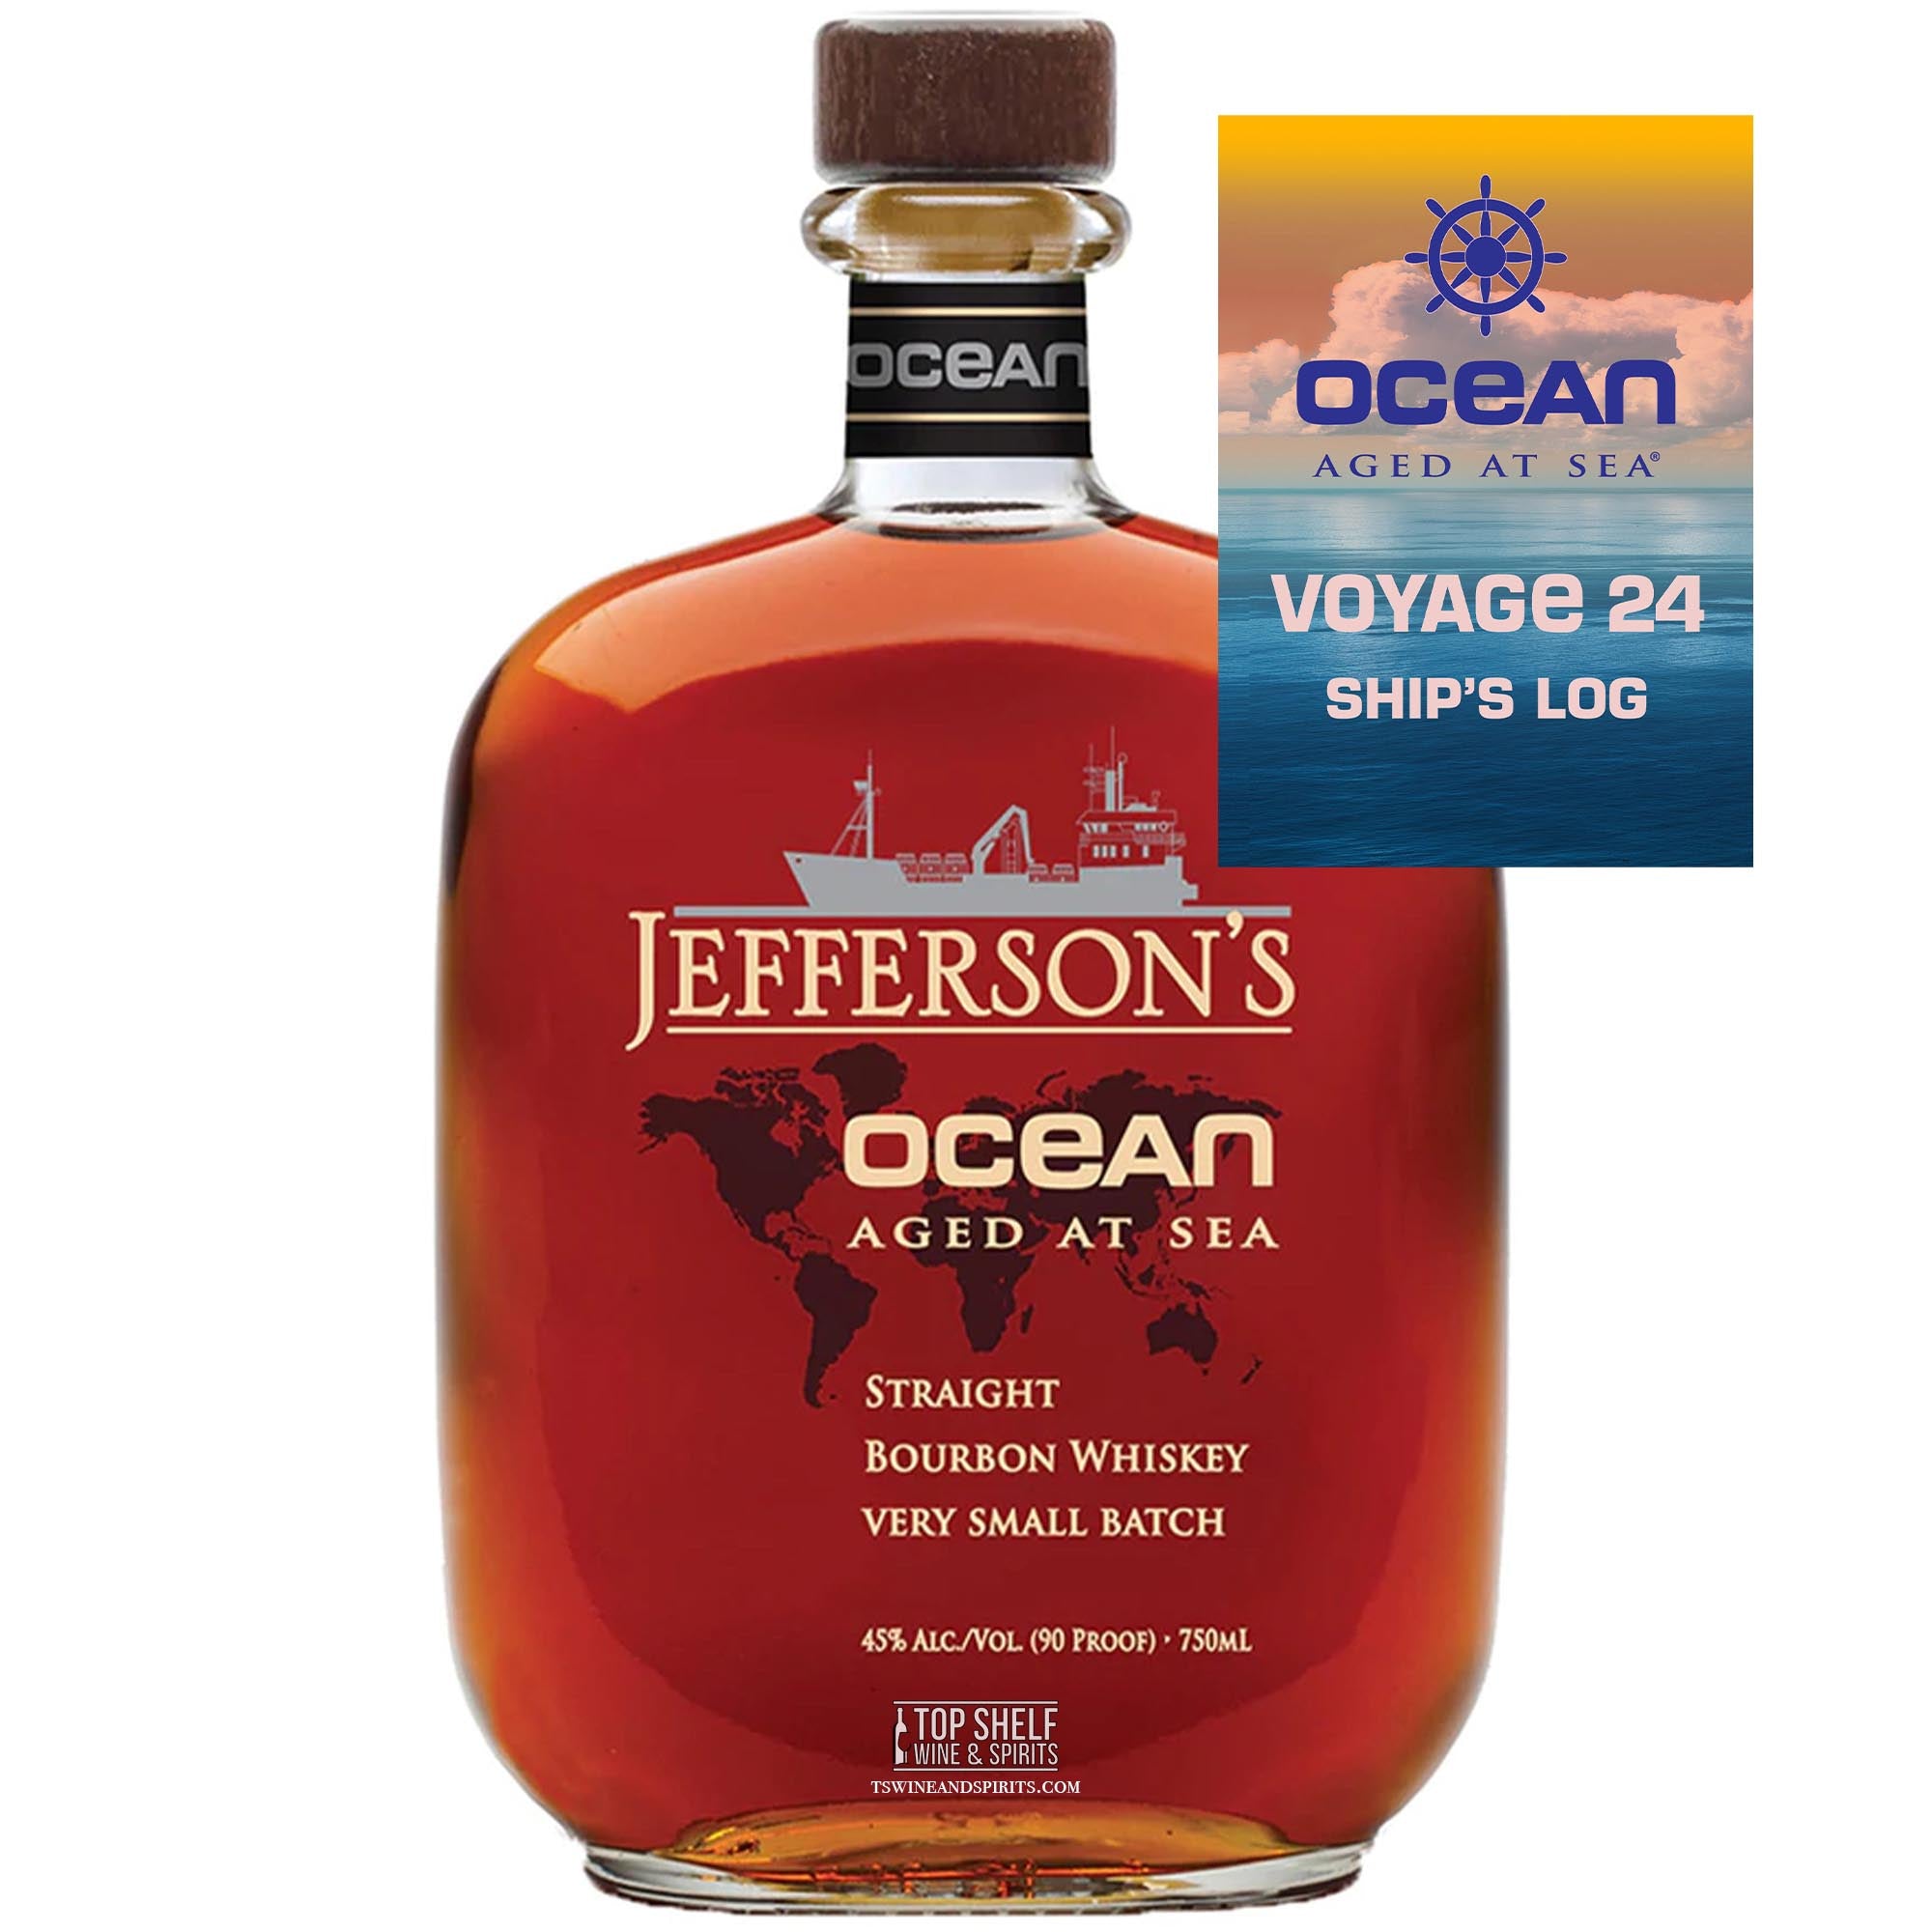 Jefferson's Ocean Voyage 24